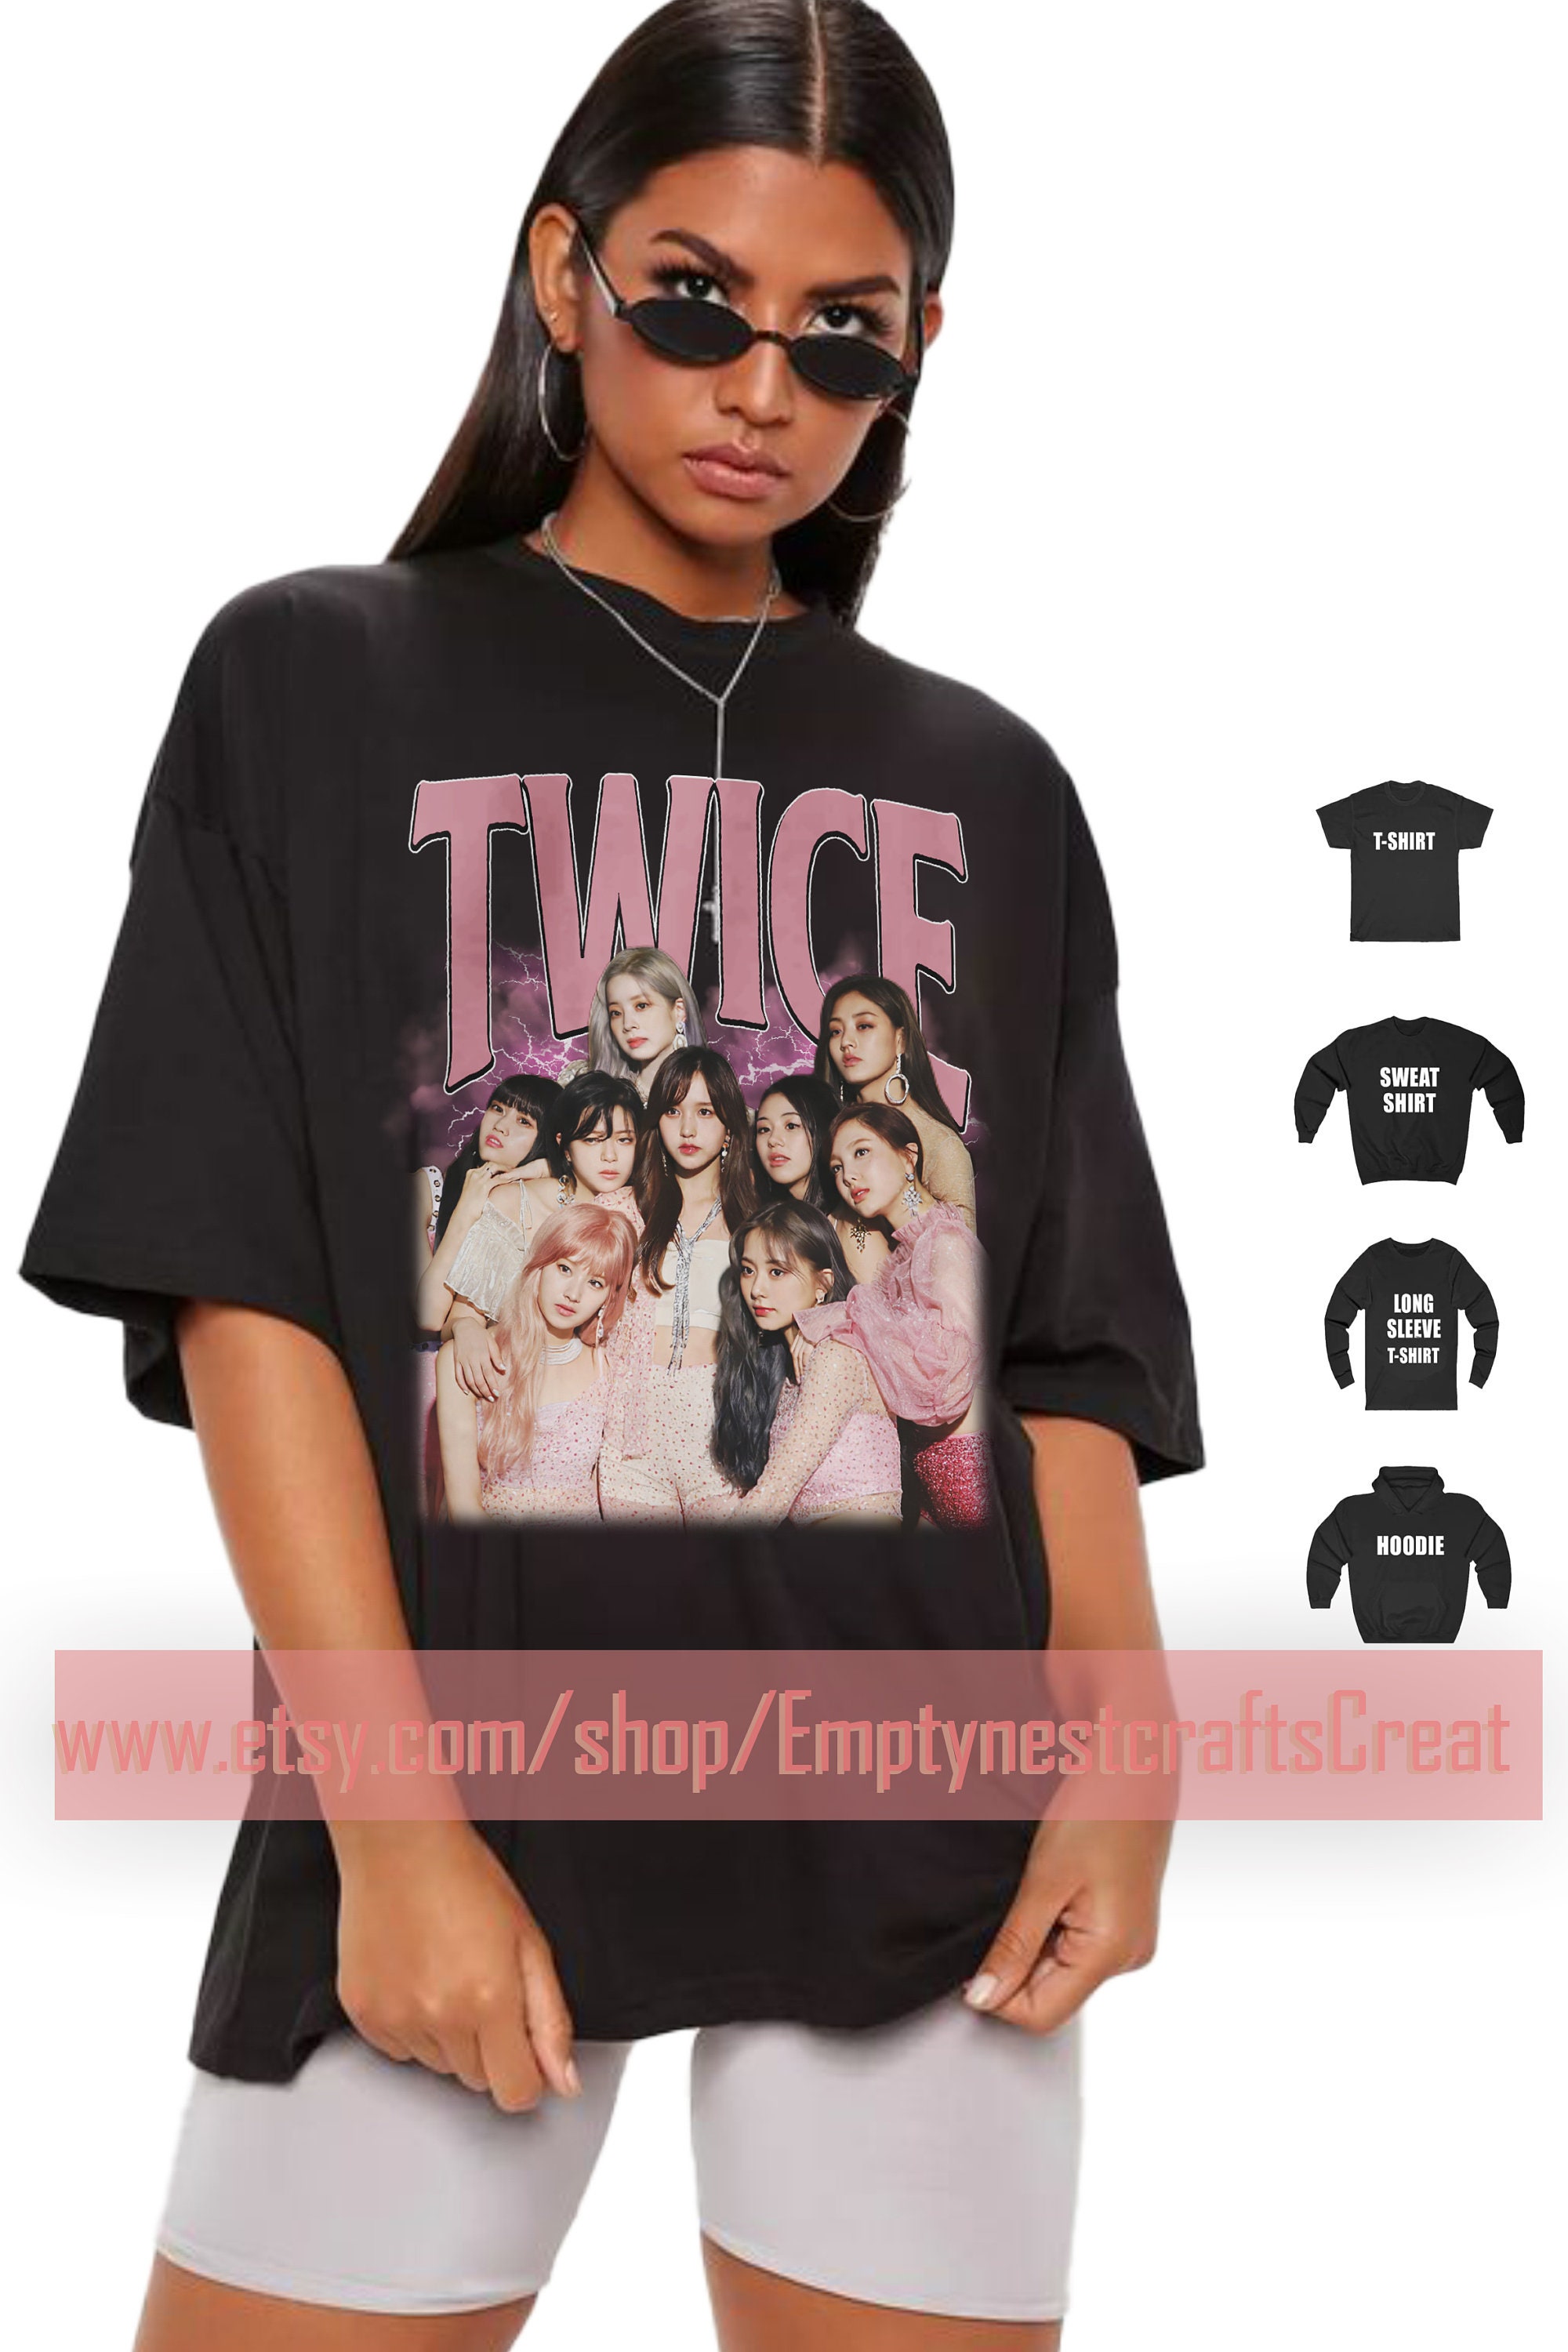 Twice Shirt Tzuyu Korean Pop Singer Kpop Fans T shirt sold by Valenka ...